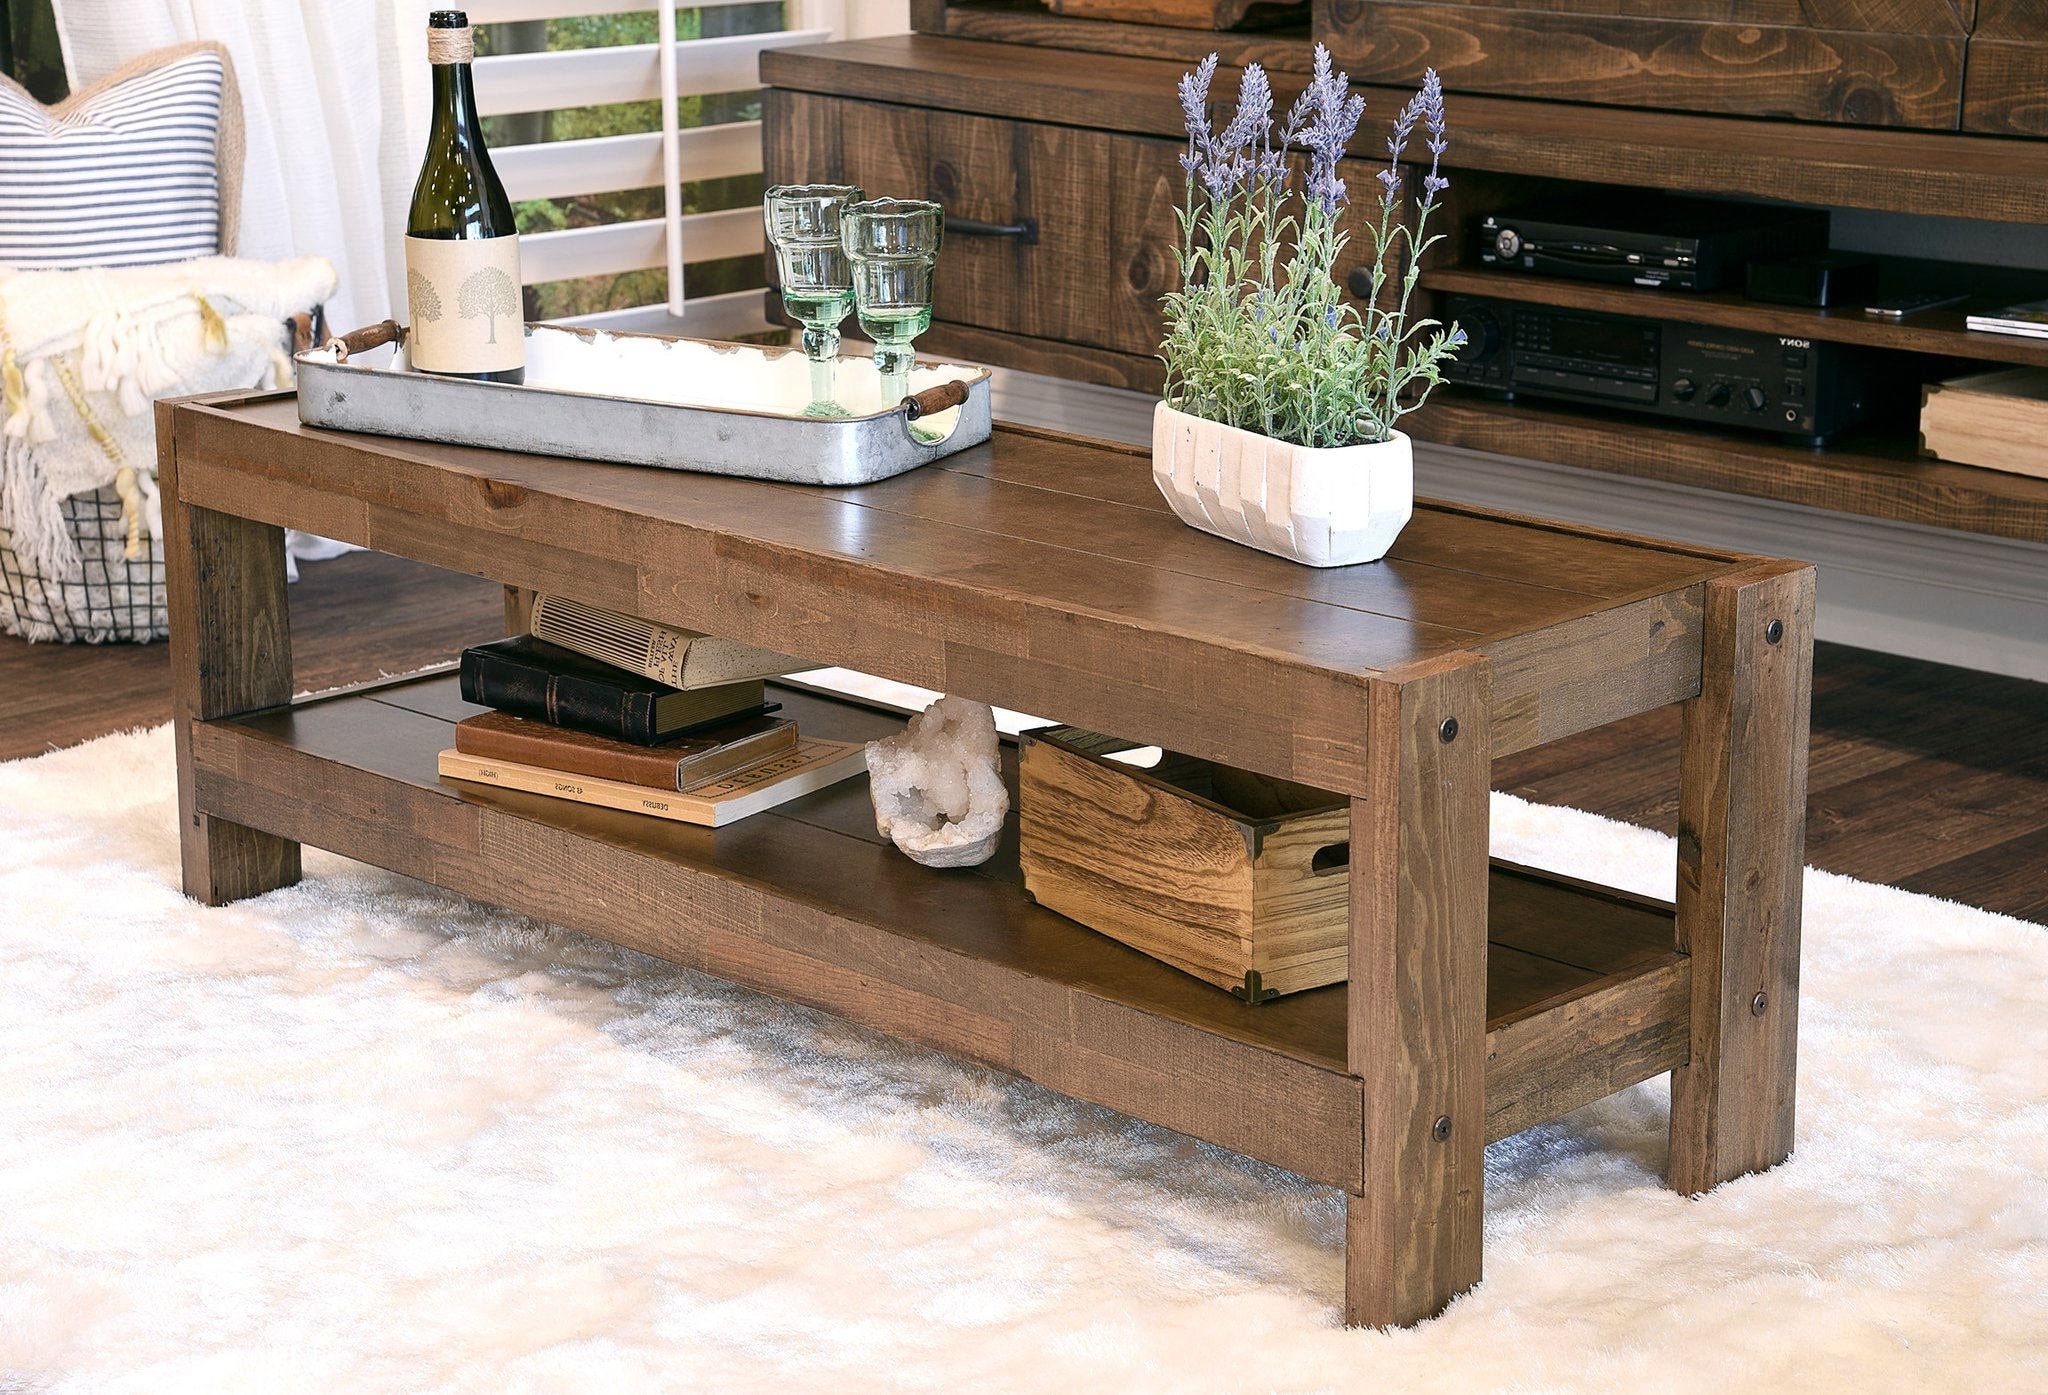 Reclaimed Wood Coffee Table Rustic Barn Wood Style | Etsy For Rustic Wood Coffee Tables (Gallery 4 of 20)